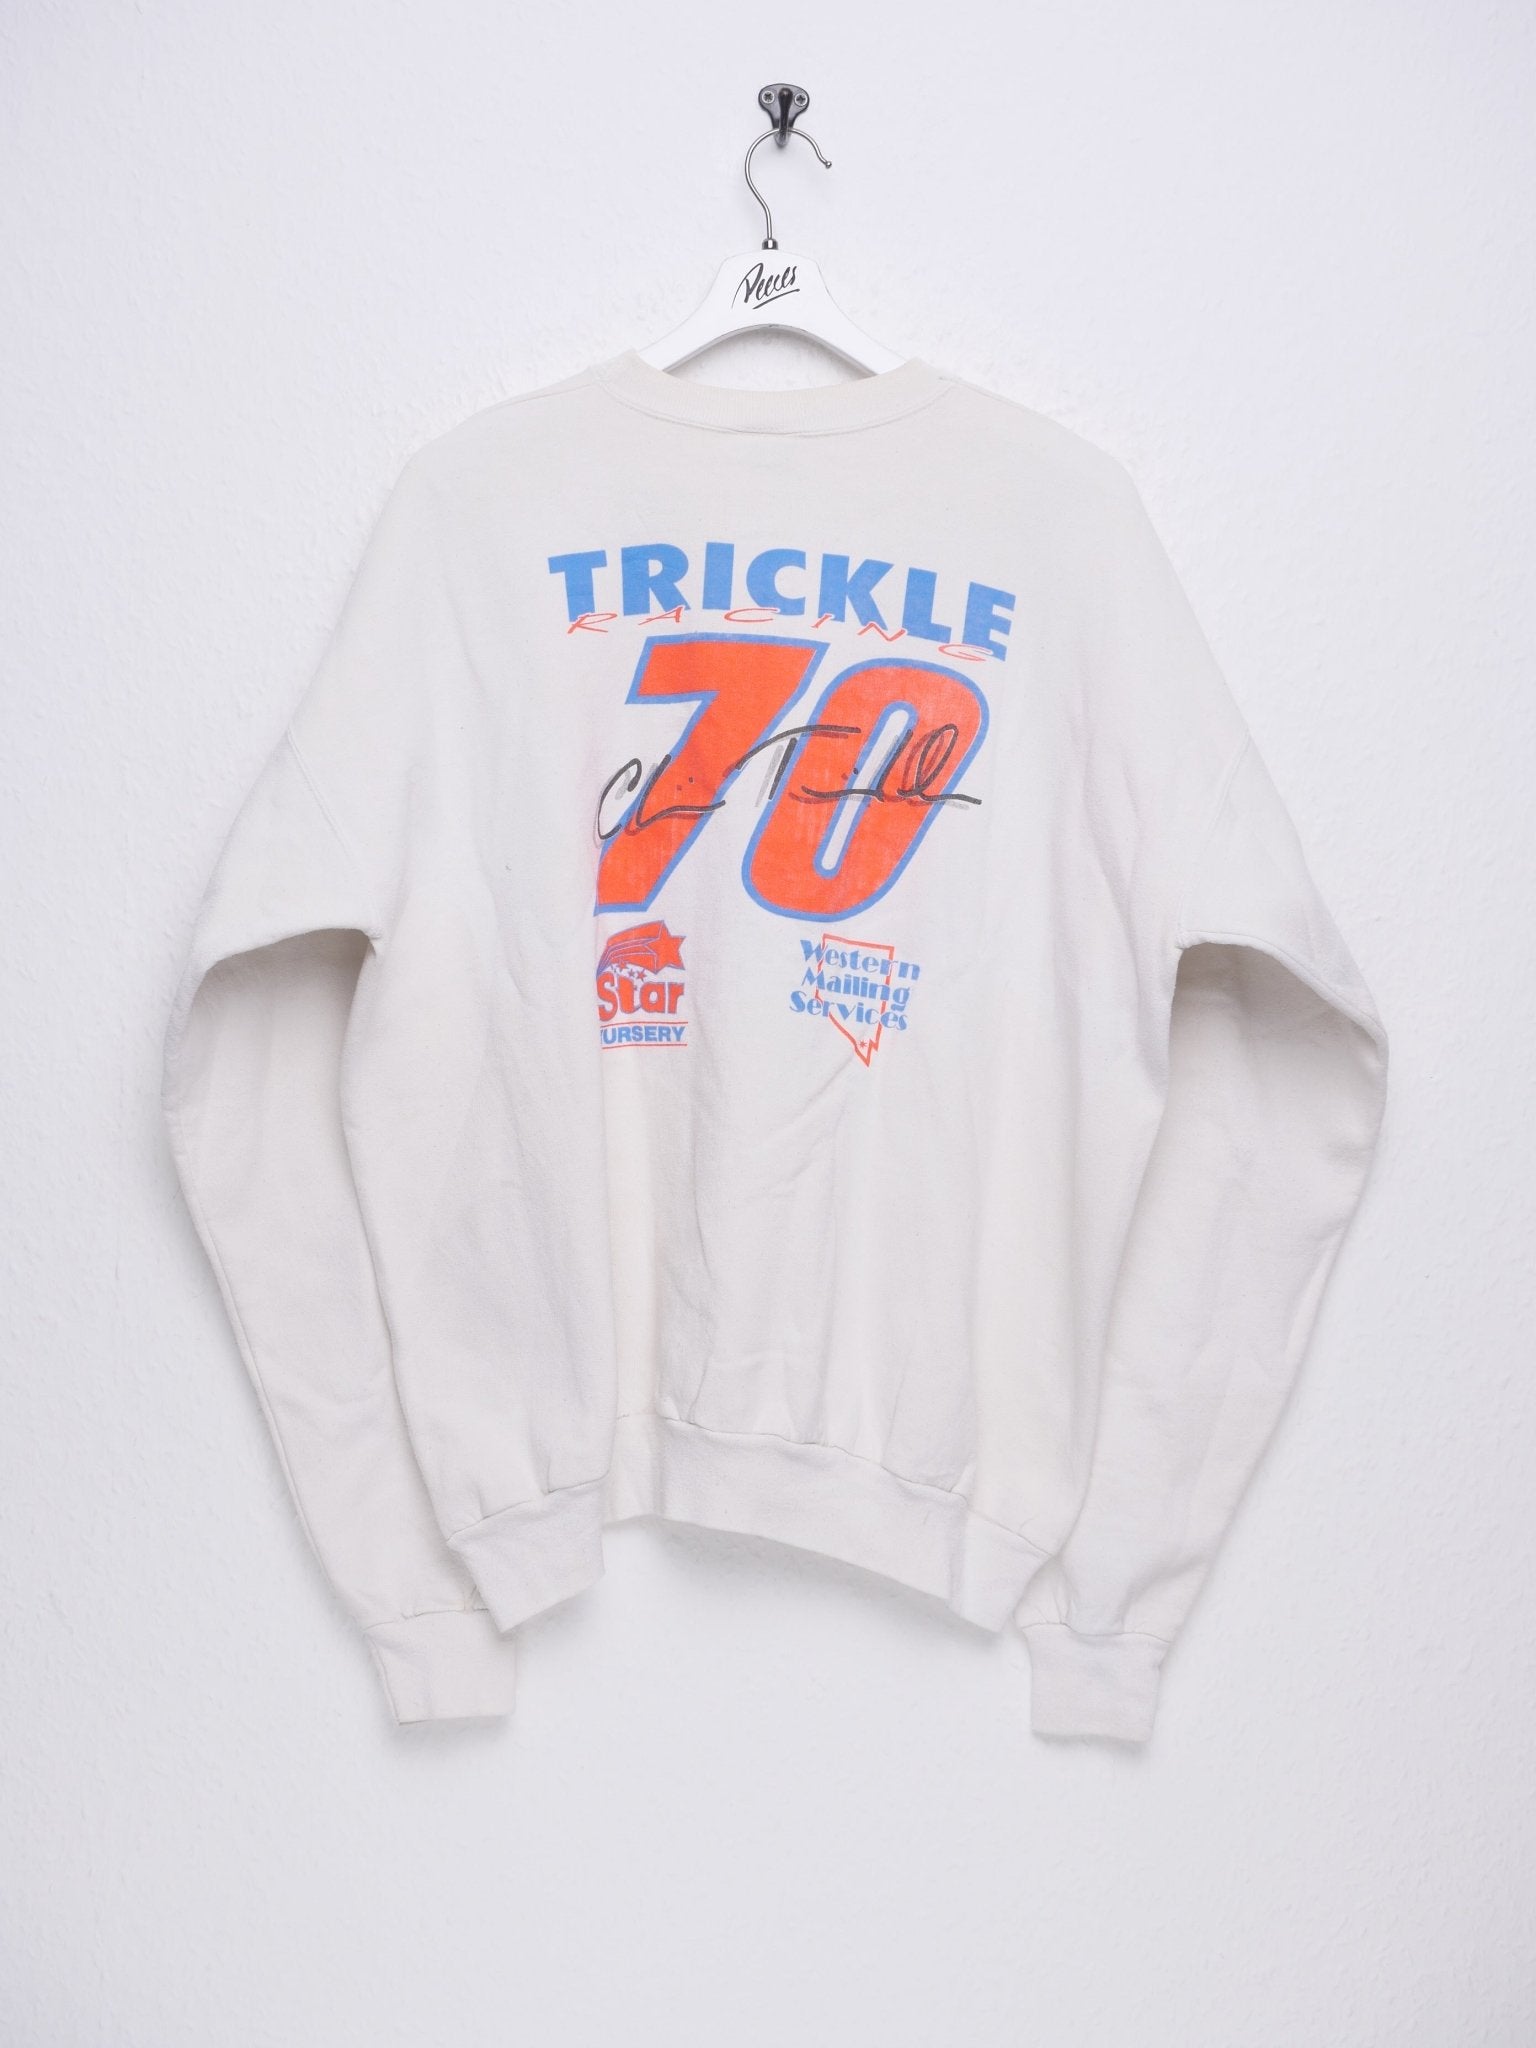 printed Trickle Racing Graphic Vintage Sweater - Peeces